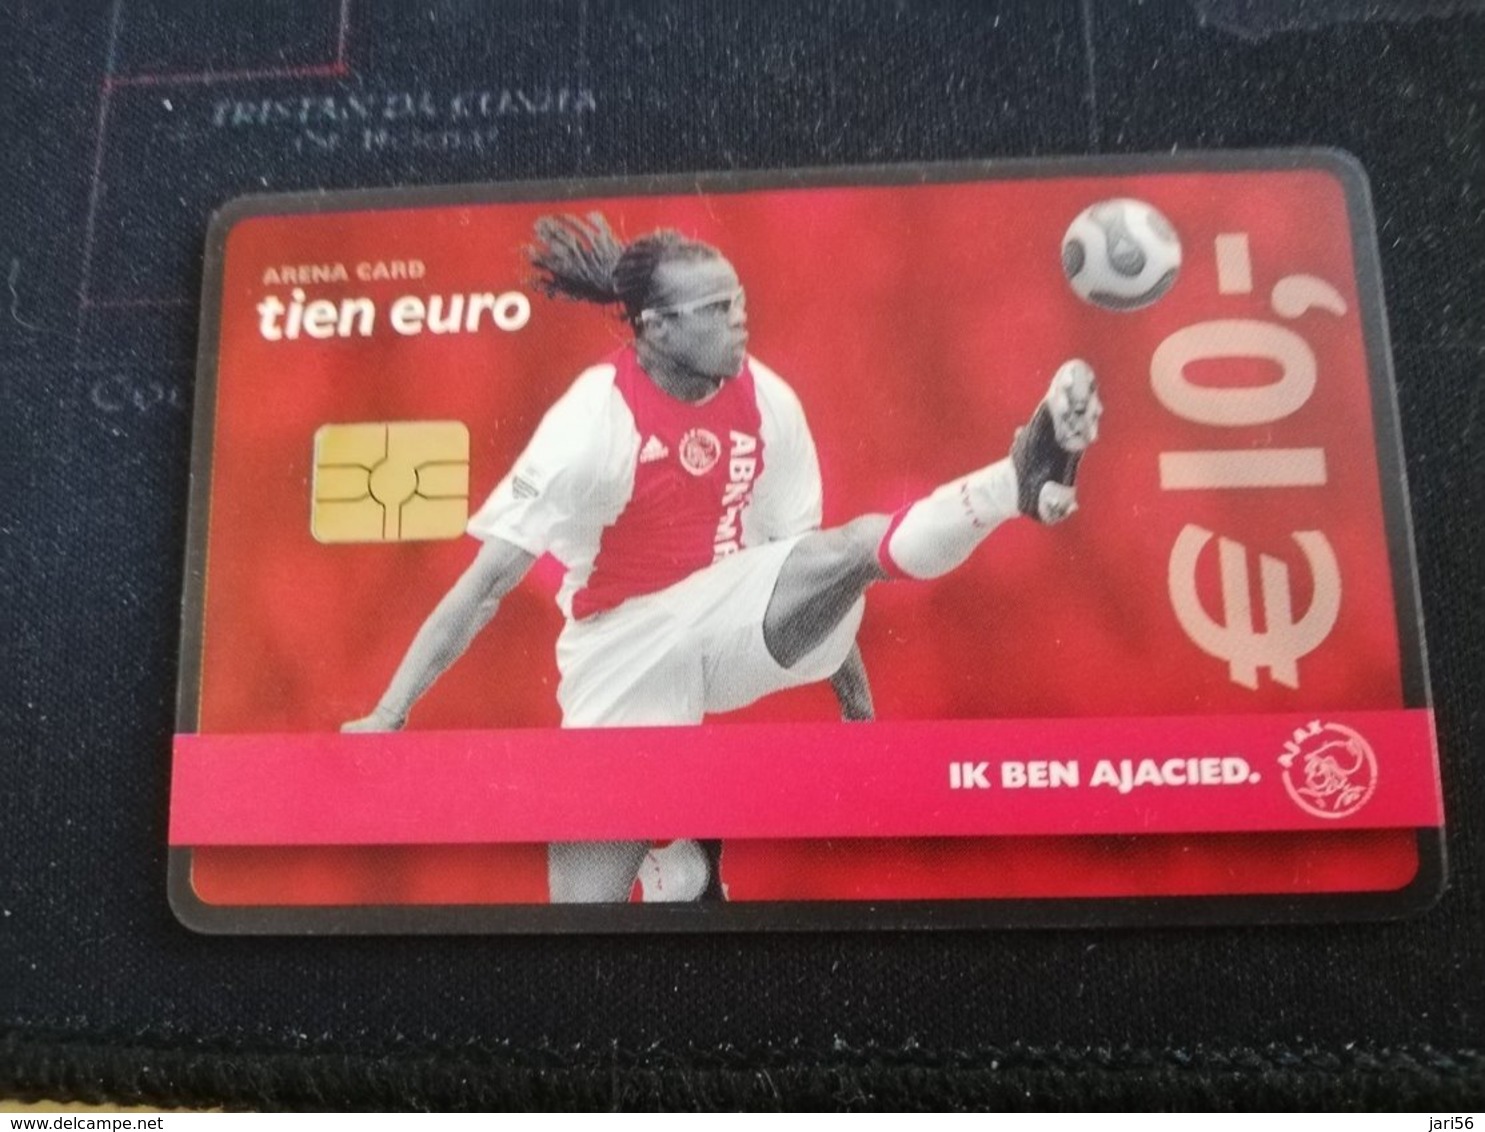 NETHERLANDS  ARENA CARD FOOTBAL/SOCCER  AJAX AMSTERDAM €10,- EDGAR DAVIDS  USED CARD  ** 1417 ** - Public